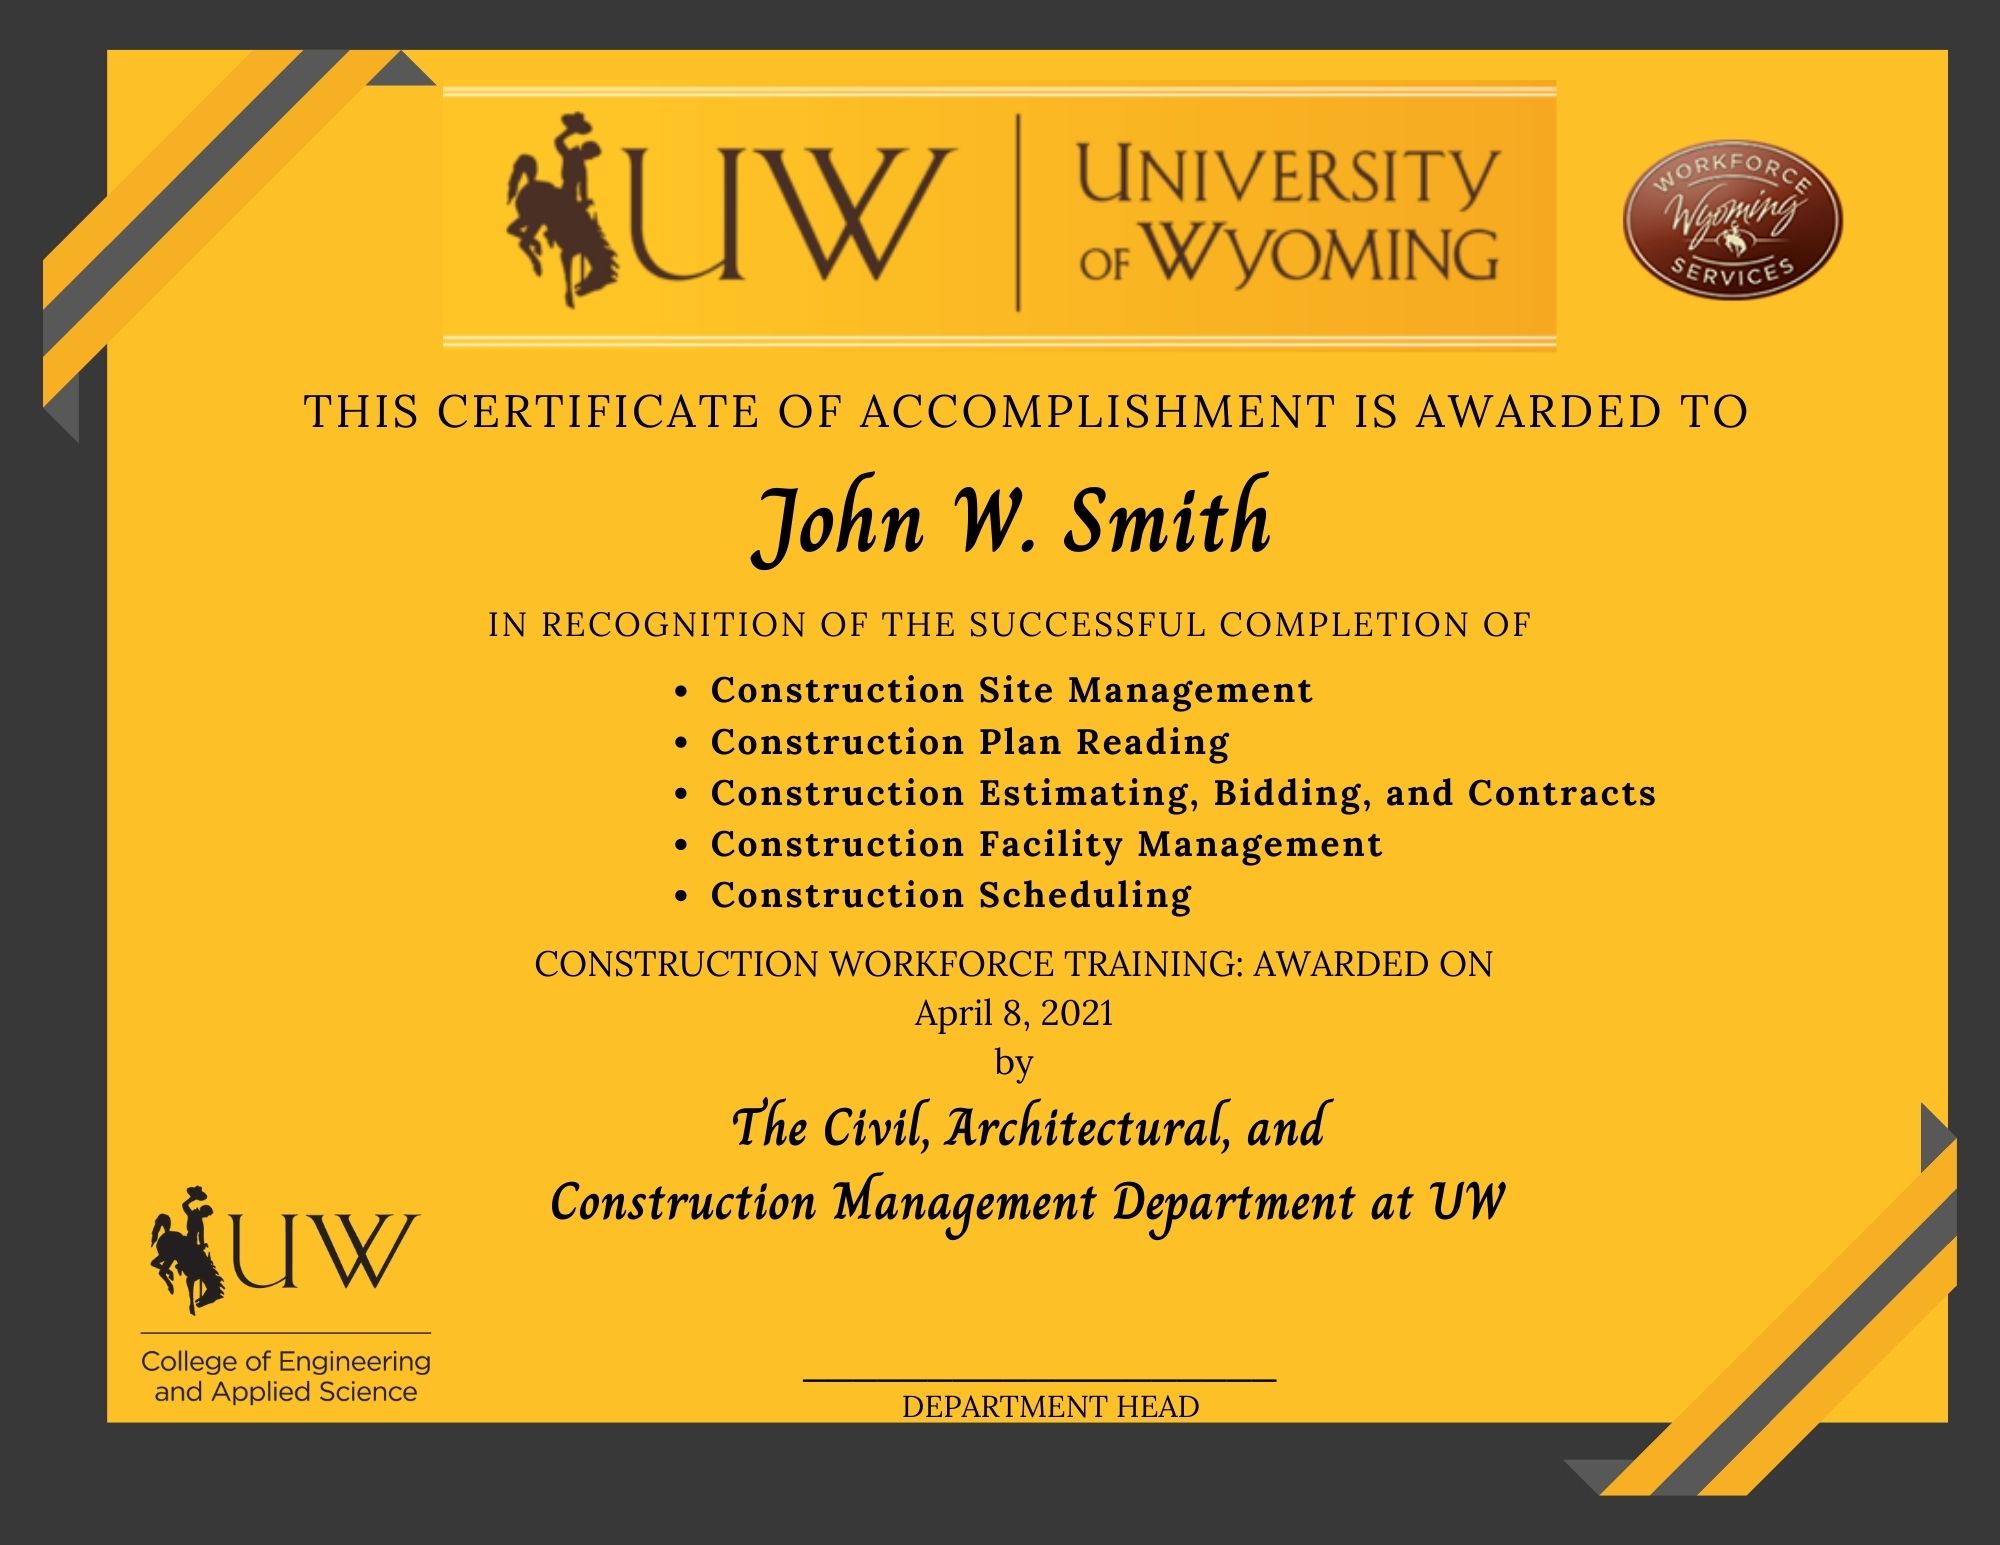 certificate of accomplishment image 